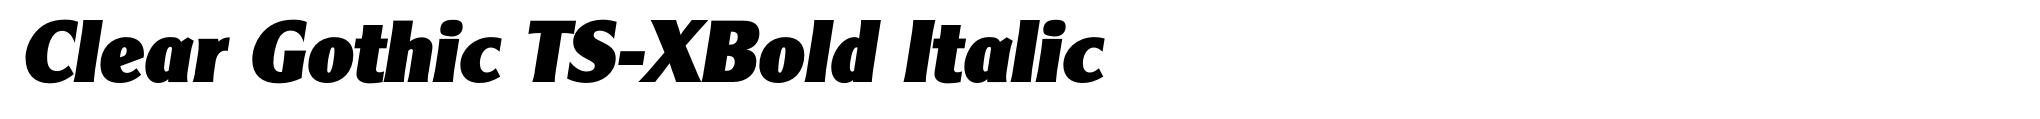 Clear Gothic TS-XBold Italic image